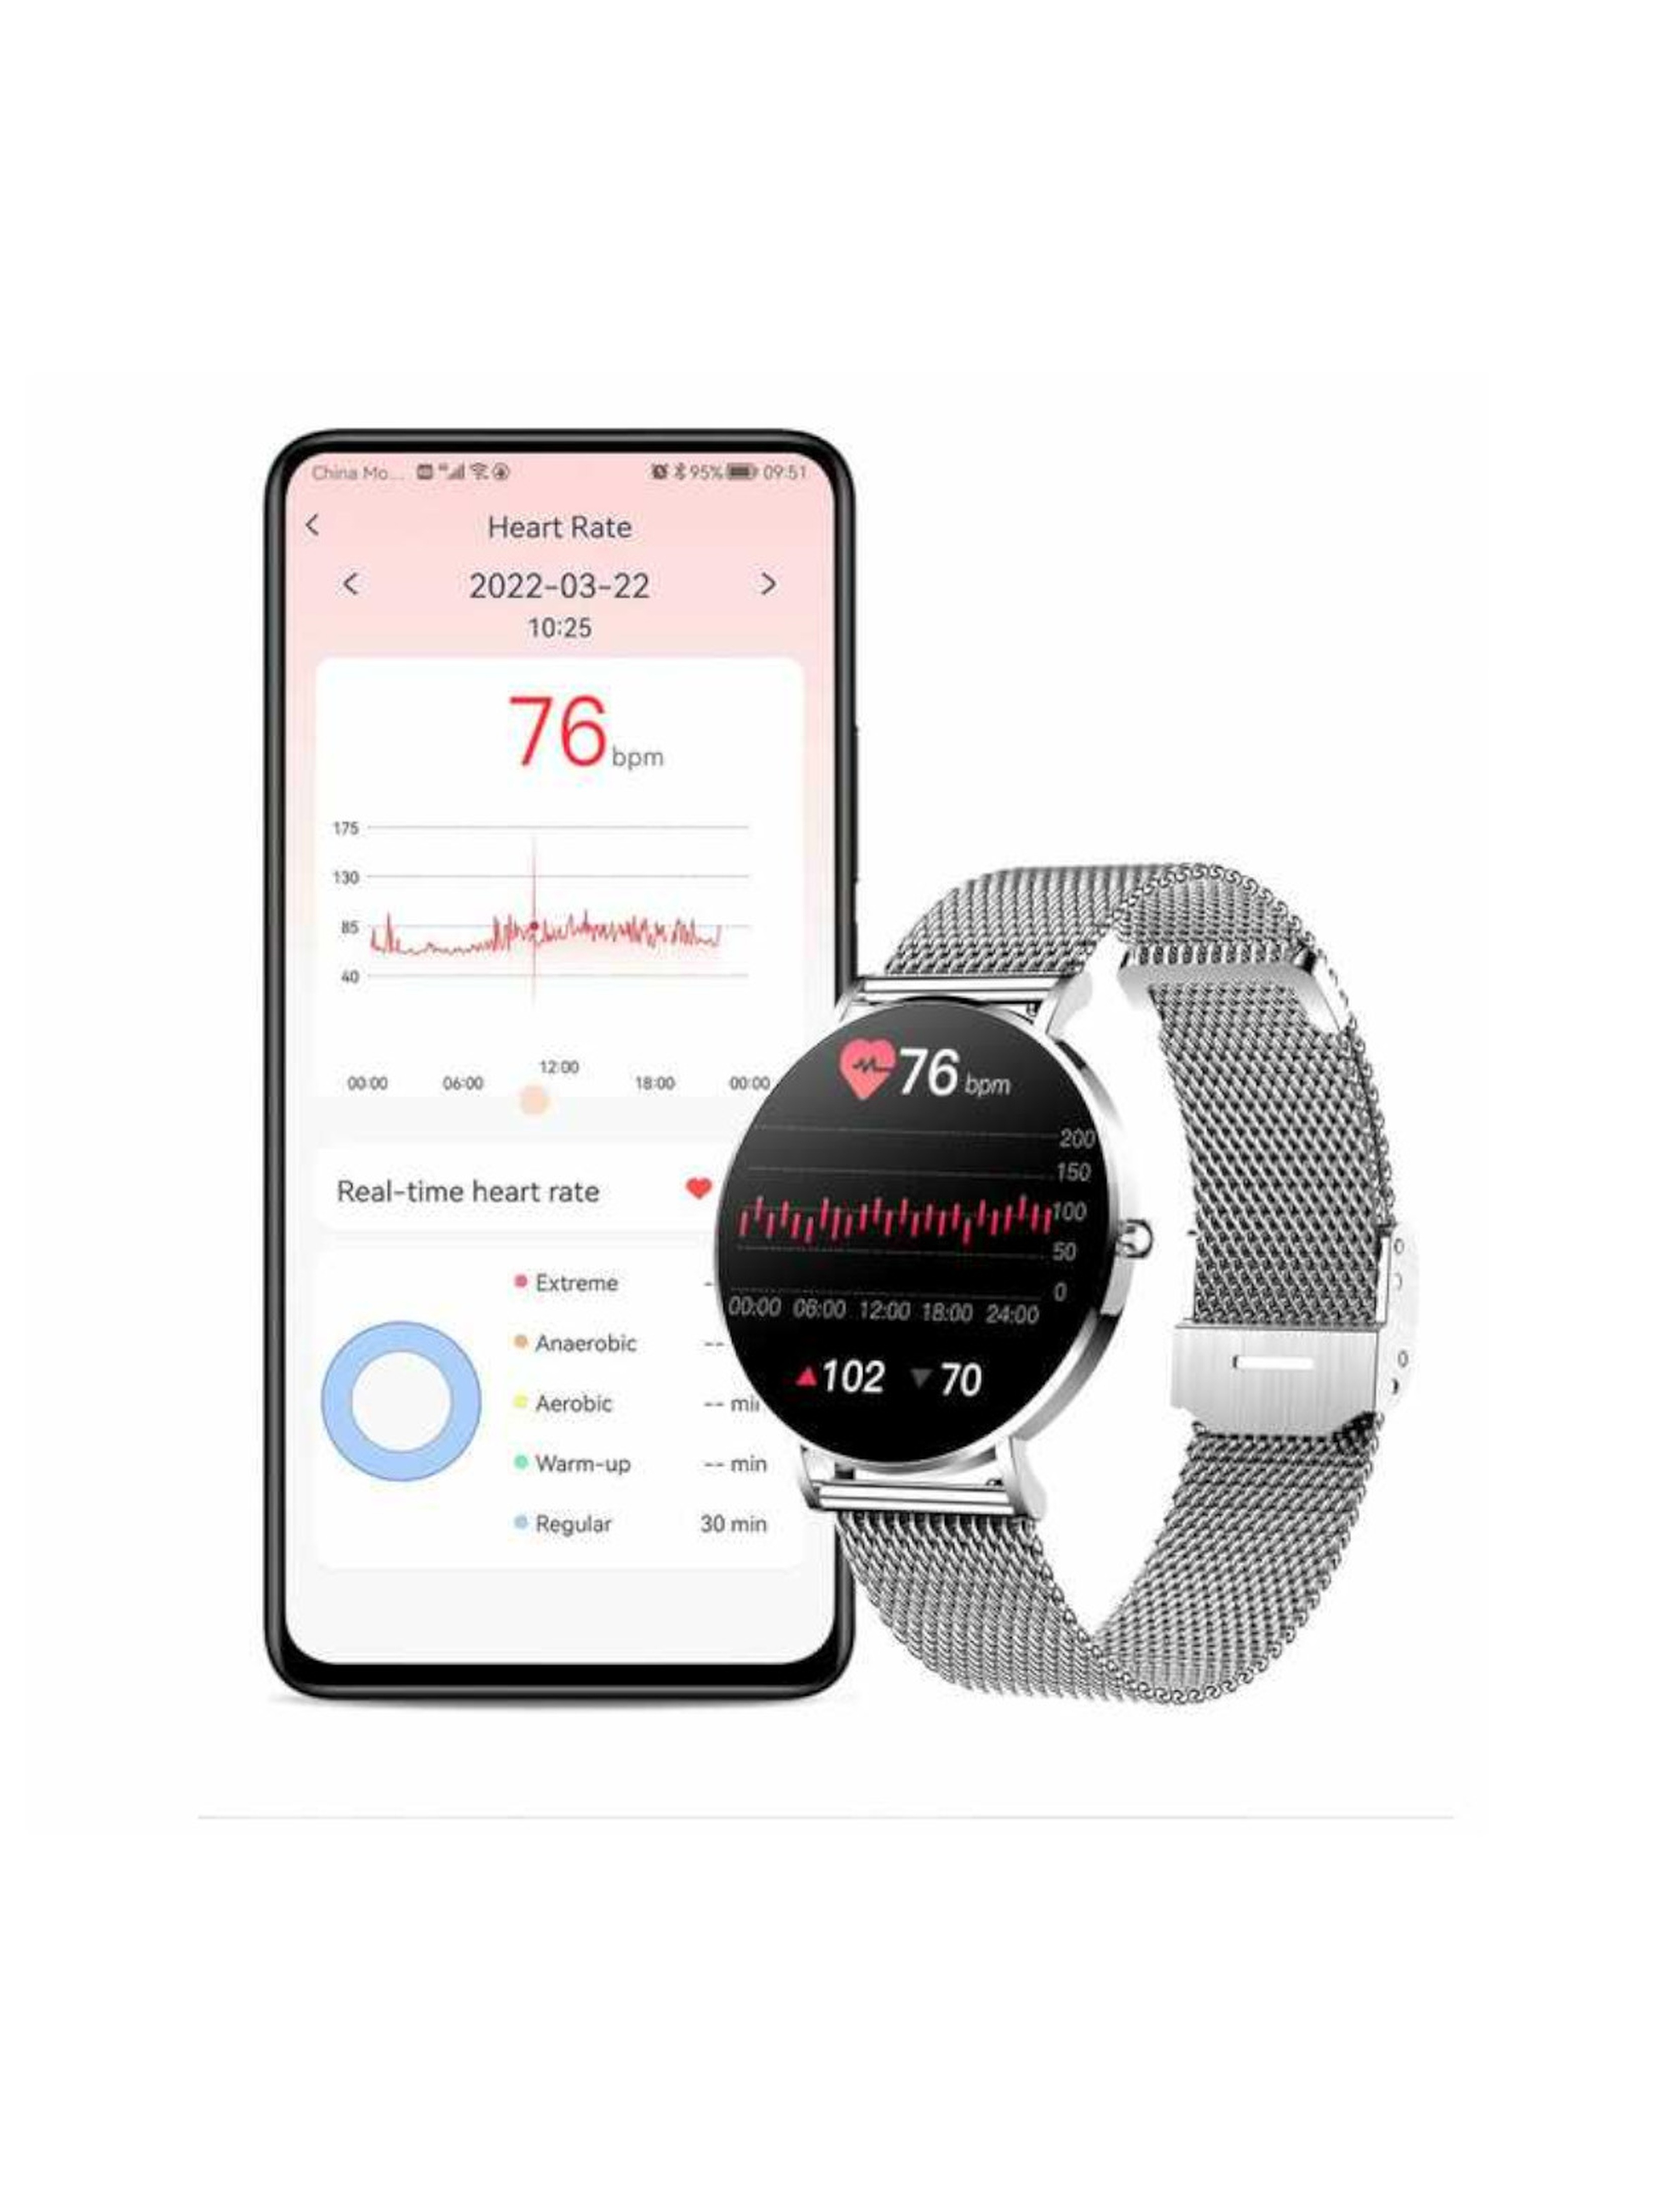 Smartwatch zegarek damski Manta Alexa - srebrny + czarny pasek